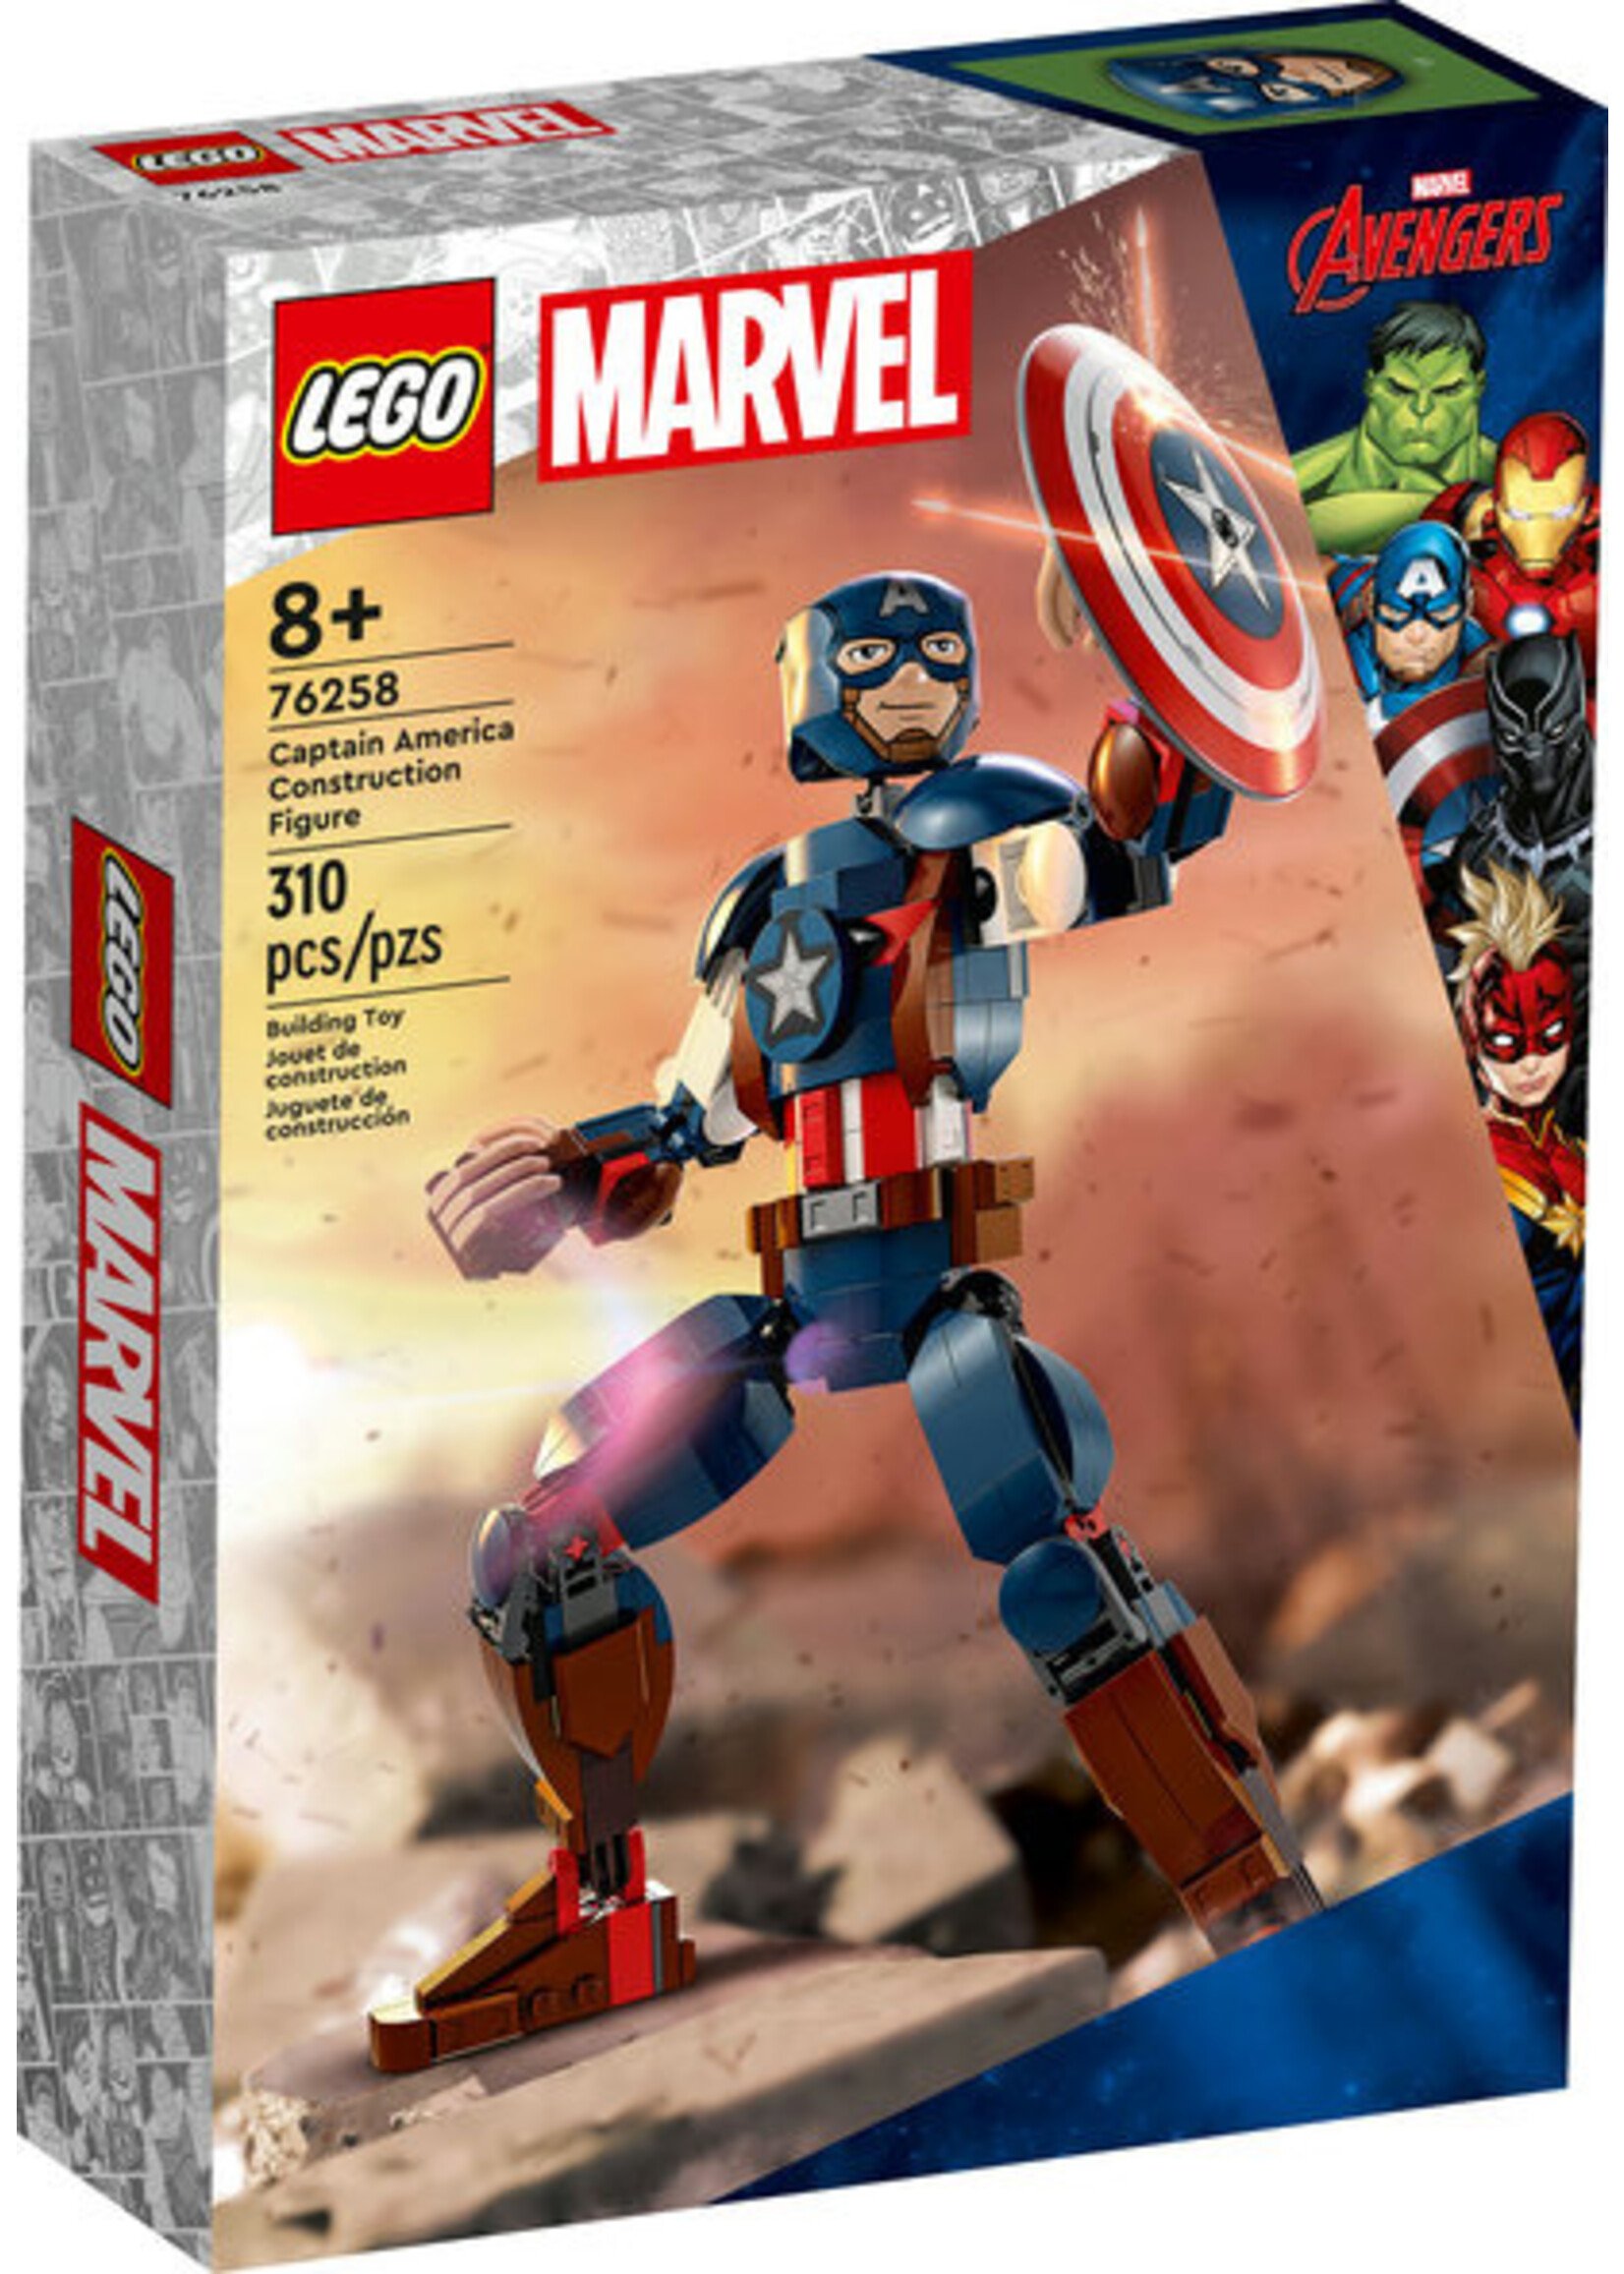 LEGO 76258 - Captain America Construction Figure